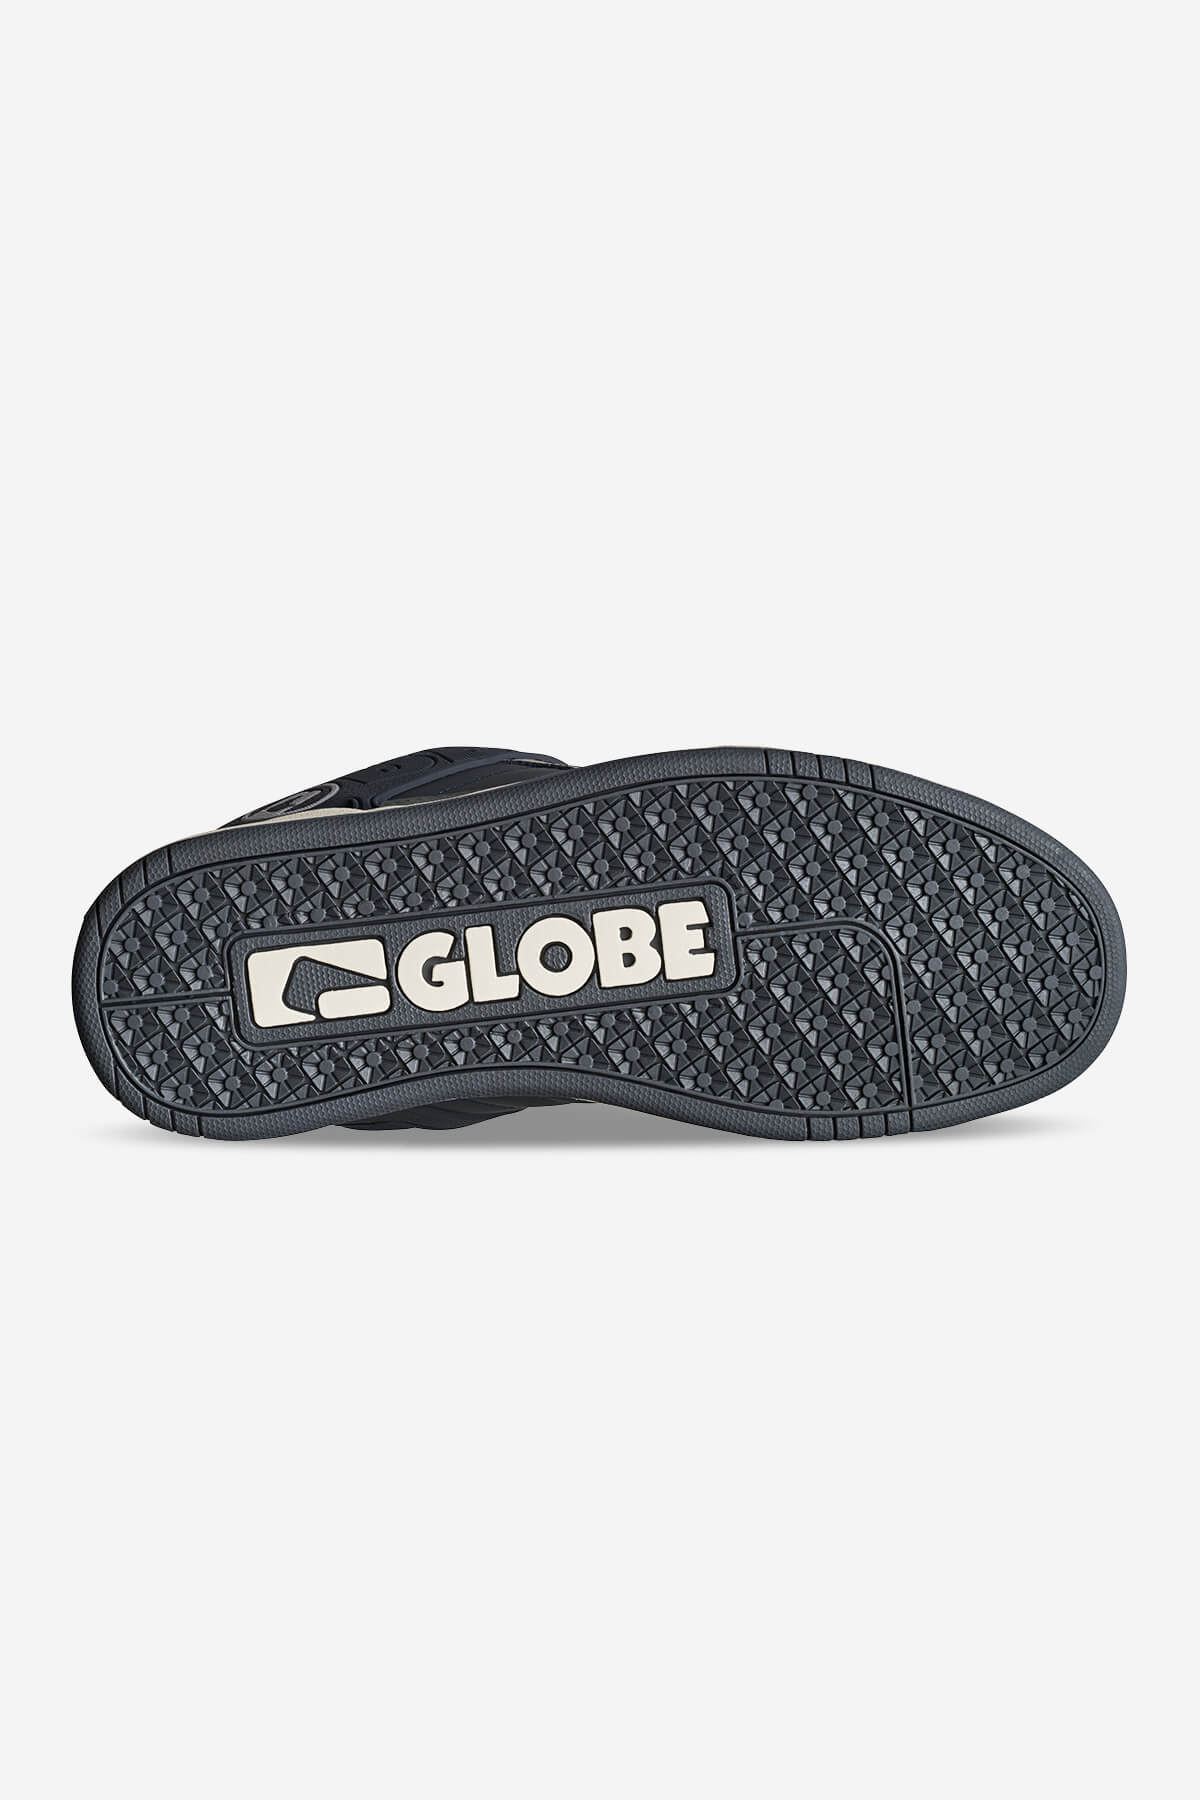 Globe - Tilt - Ebony/Charcoal - skateboard Chaussures